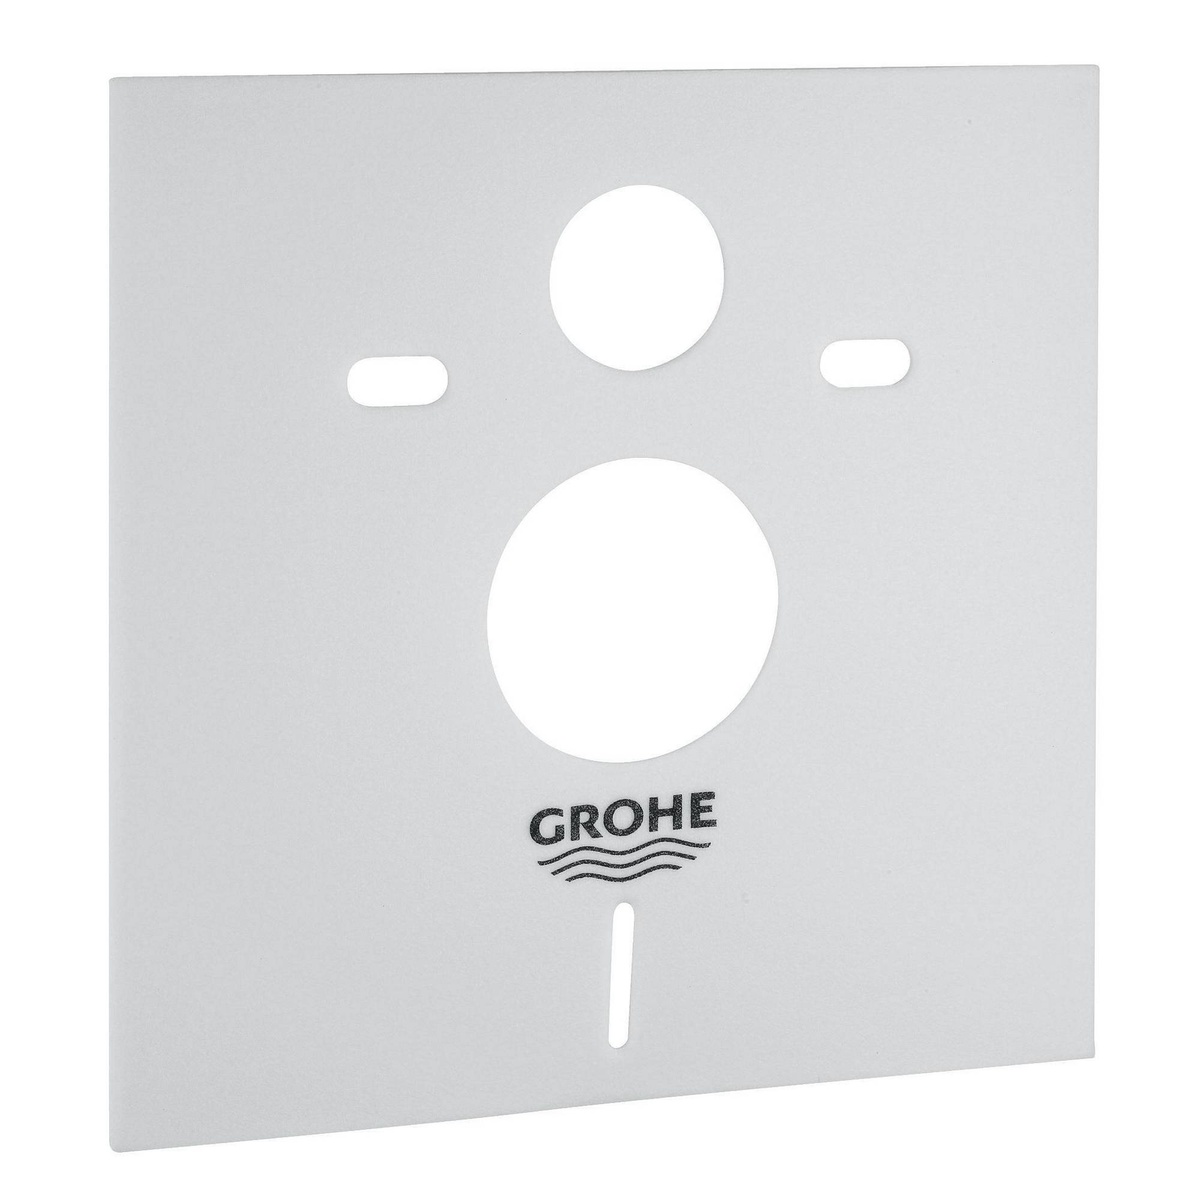 Комплект инсталляции GROHE Rapid SL кнопка белая безободковый унитаз Q-TAP с крышкой микролифт дюропласт 38722001QT07335176W2904800S